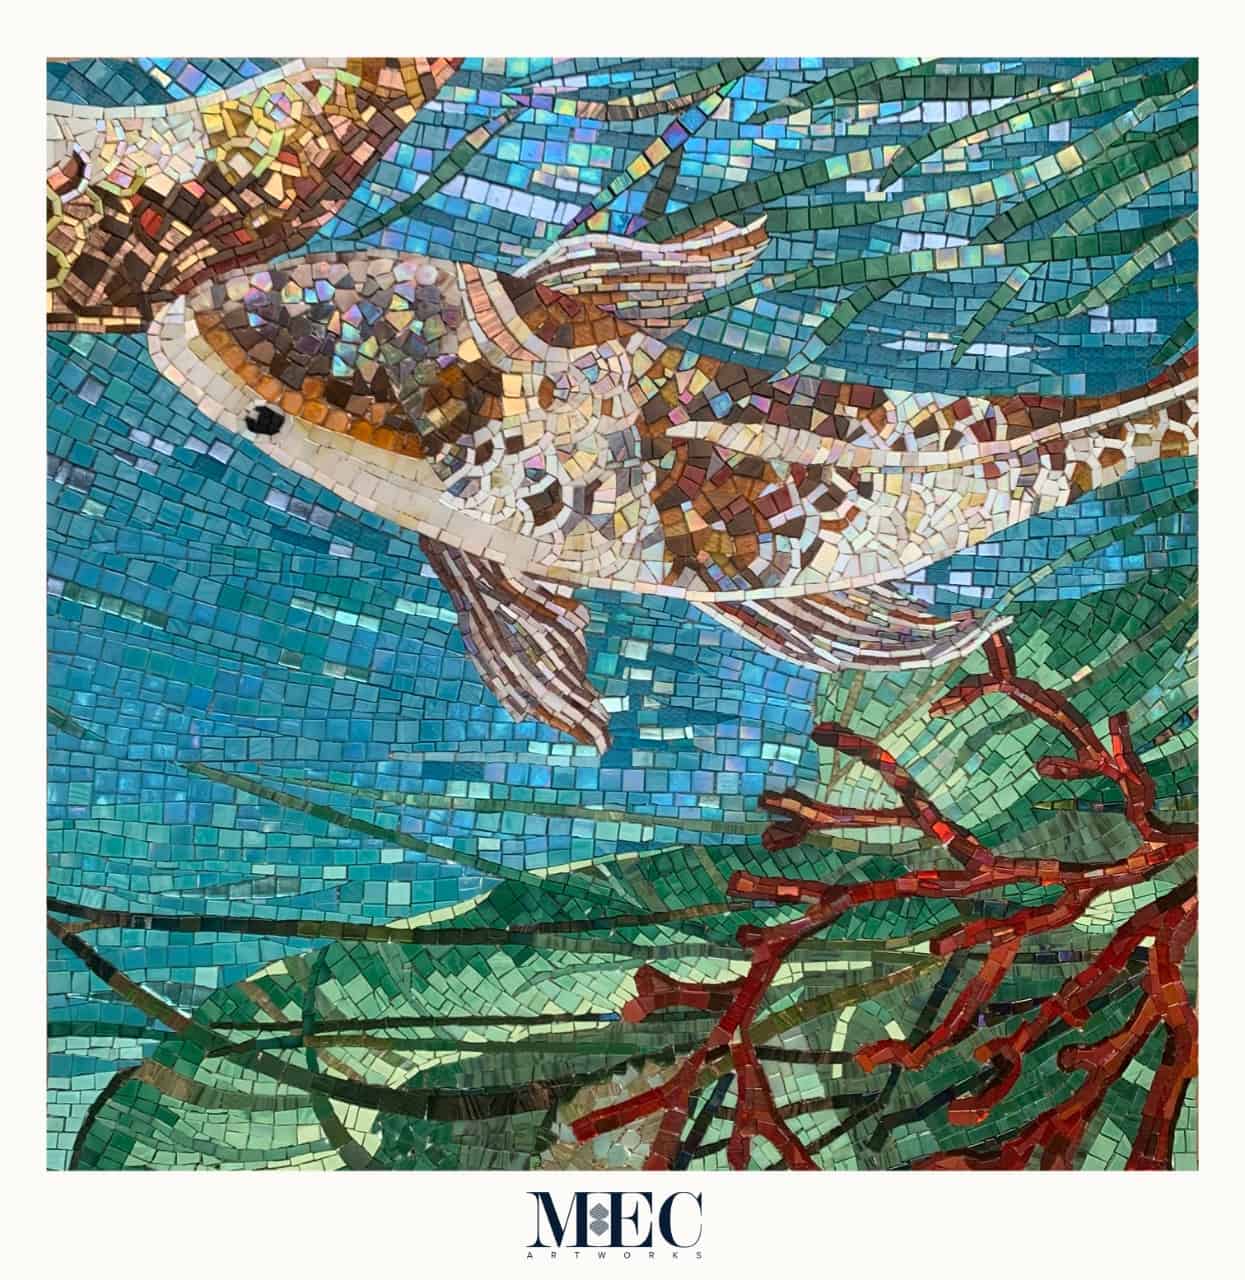 glass mosaic animal kingdom pond fish koi fish mosaic tile art